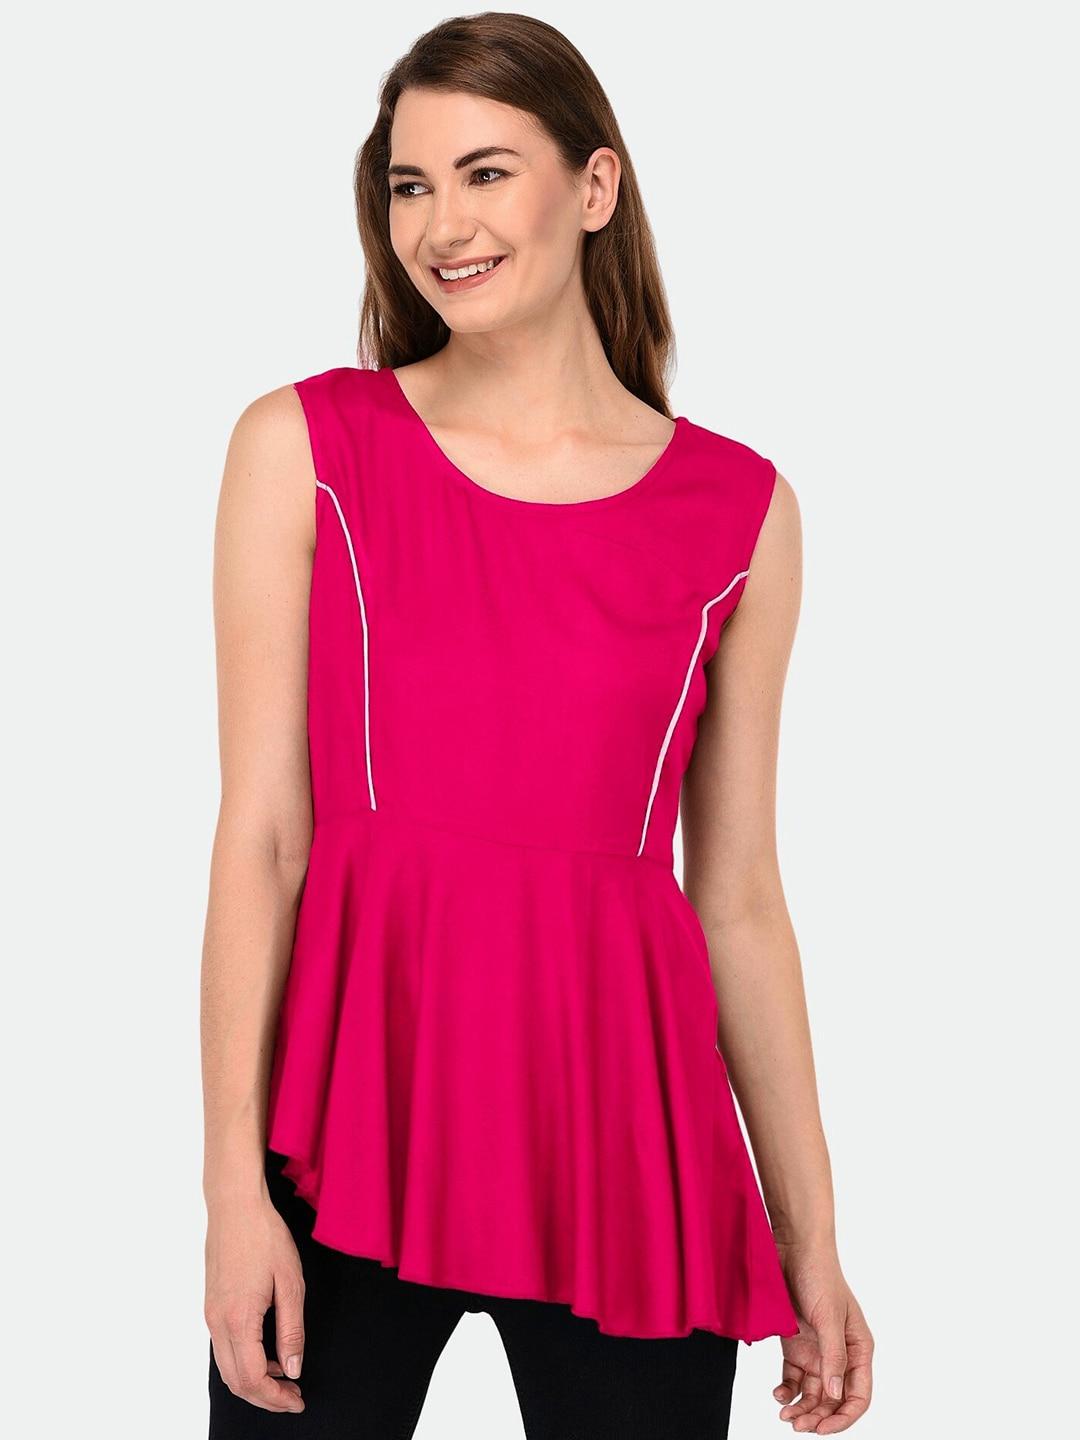 patrorna-women-pink-twisted-sleeveless-asymmetric-hem-peplum-top